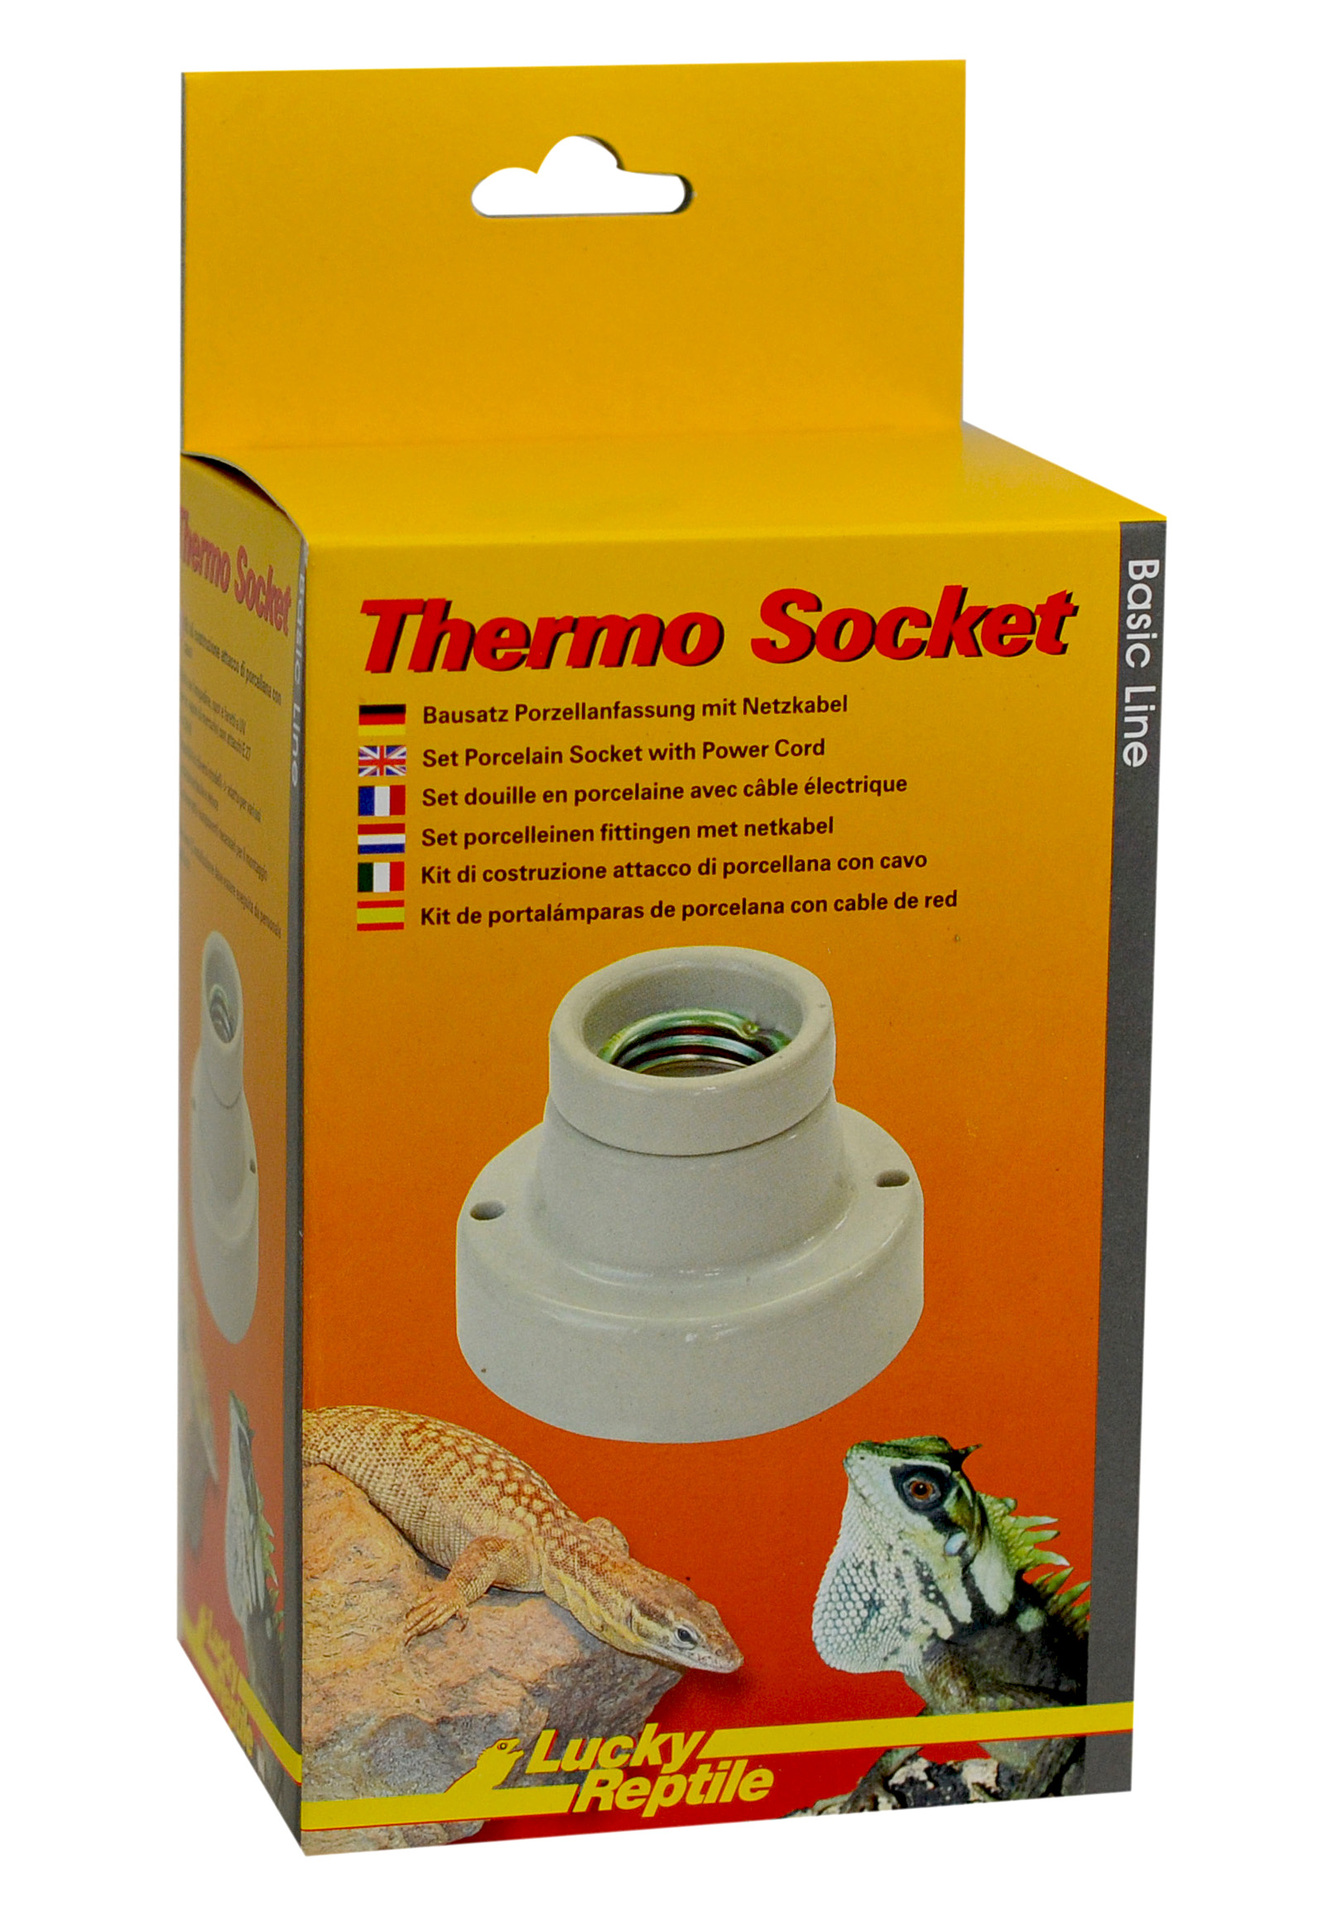 Thermo Socket - Porzellanfassung